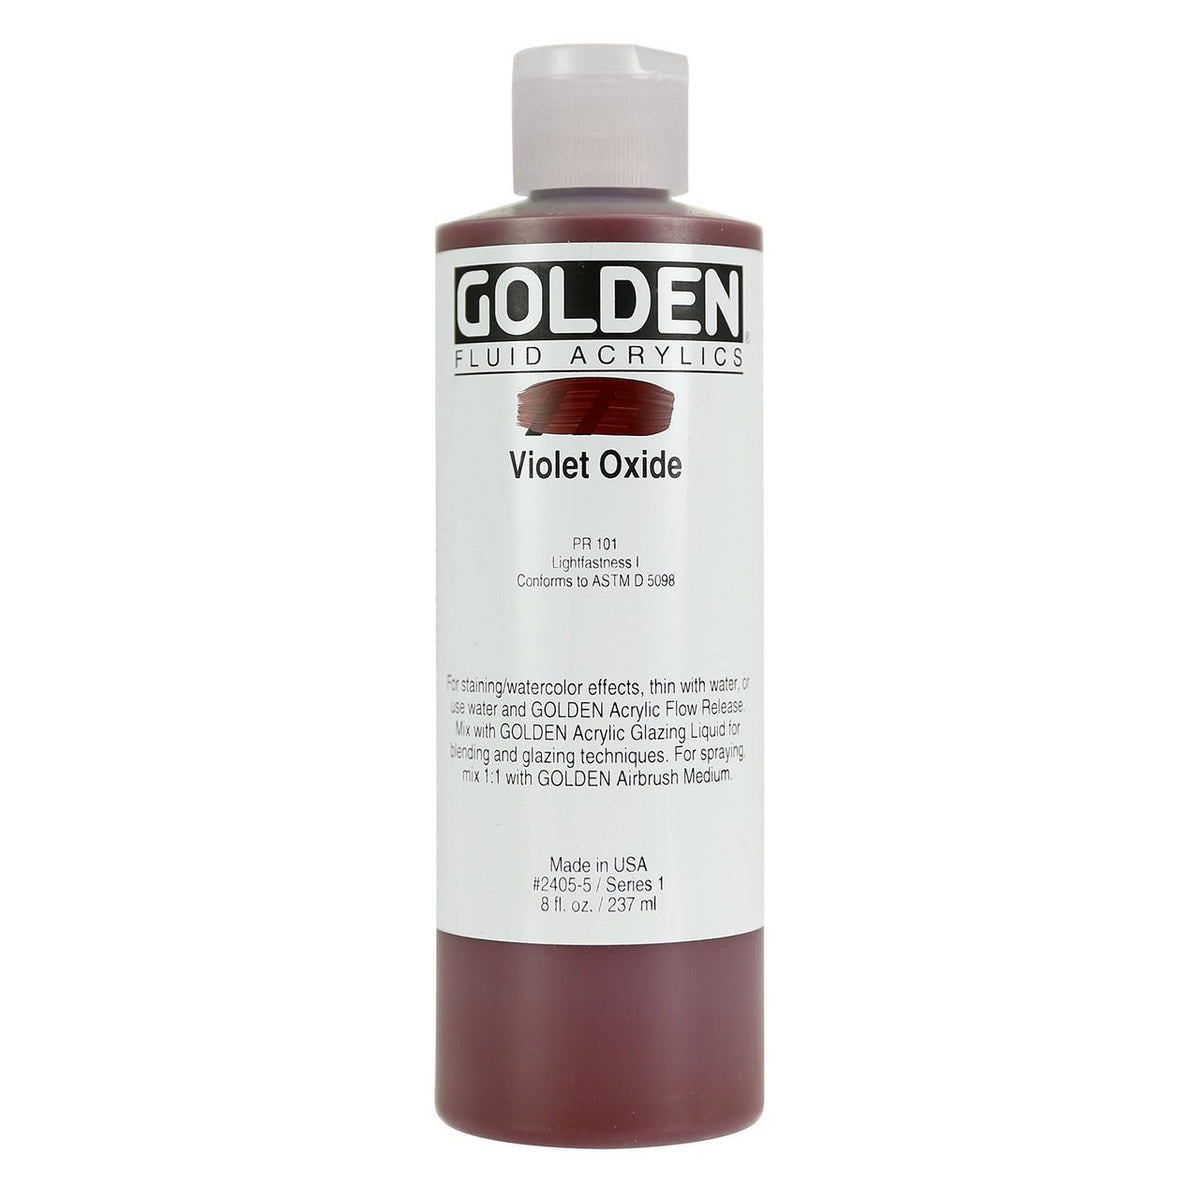 Golden Fluid Acrylic Violet Oxide 8 oz - merriartist.com